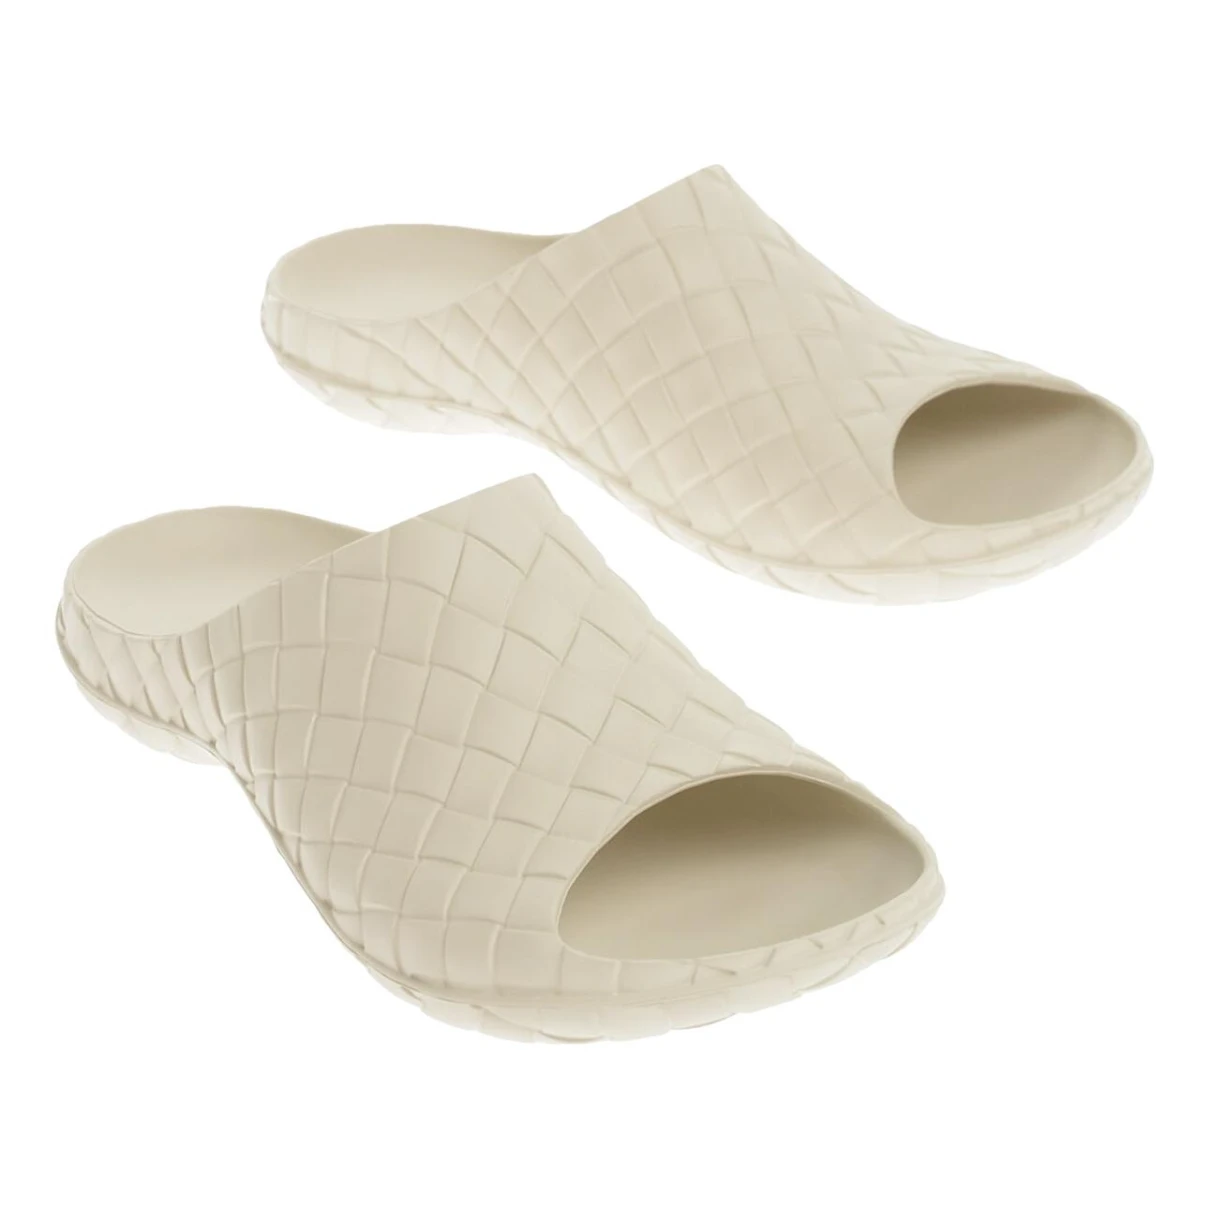 shoes Bottega Veneta sandals for Female Rubber 40 IT. Used condition